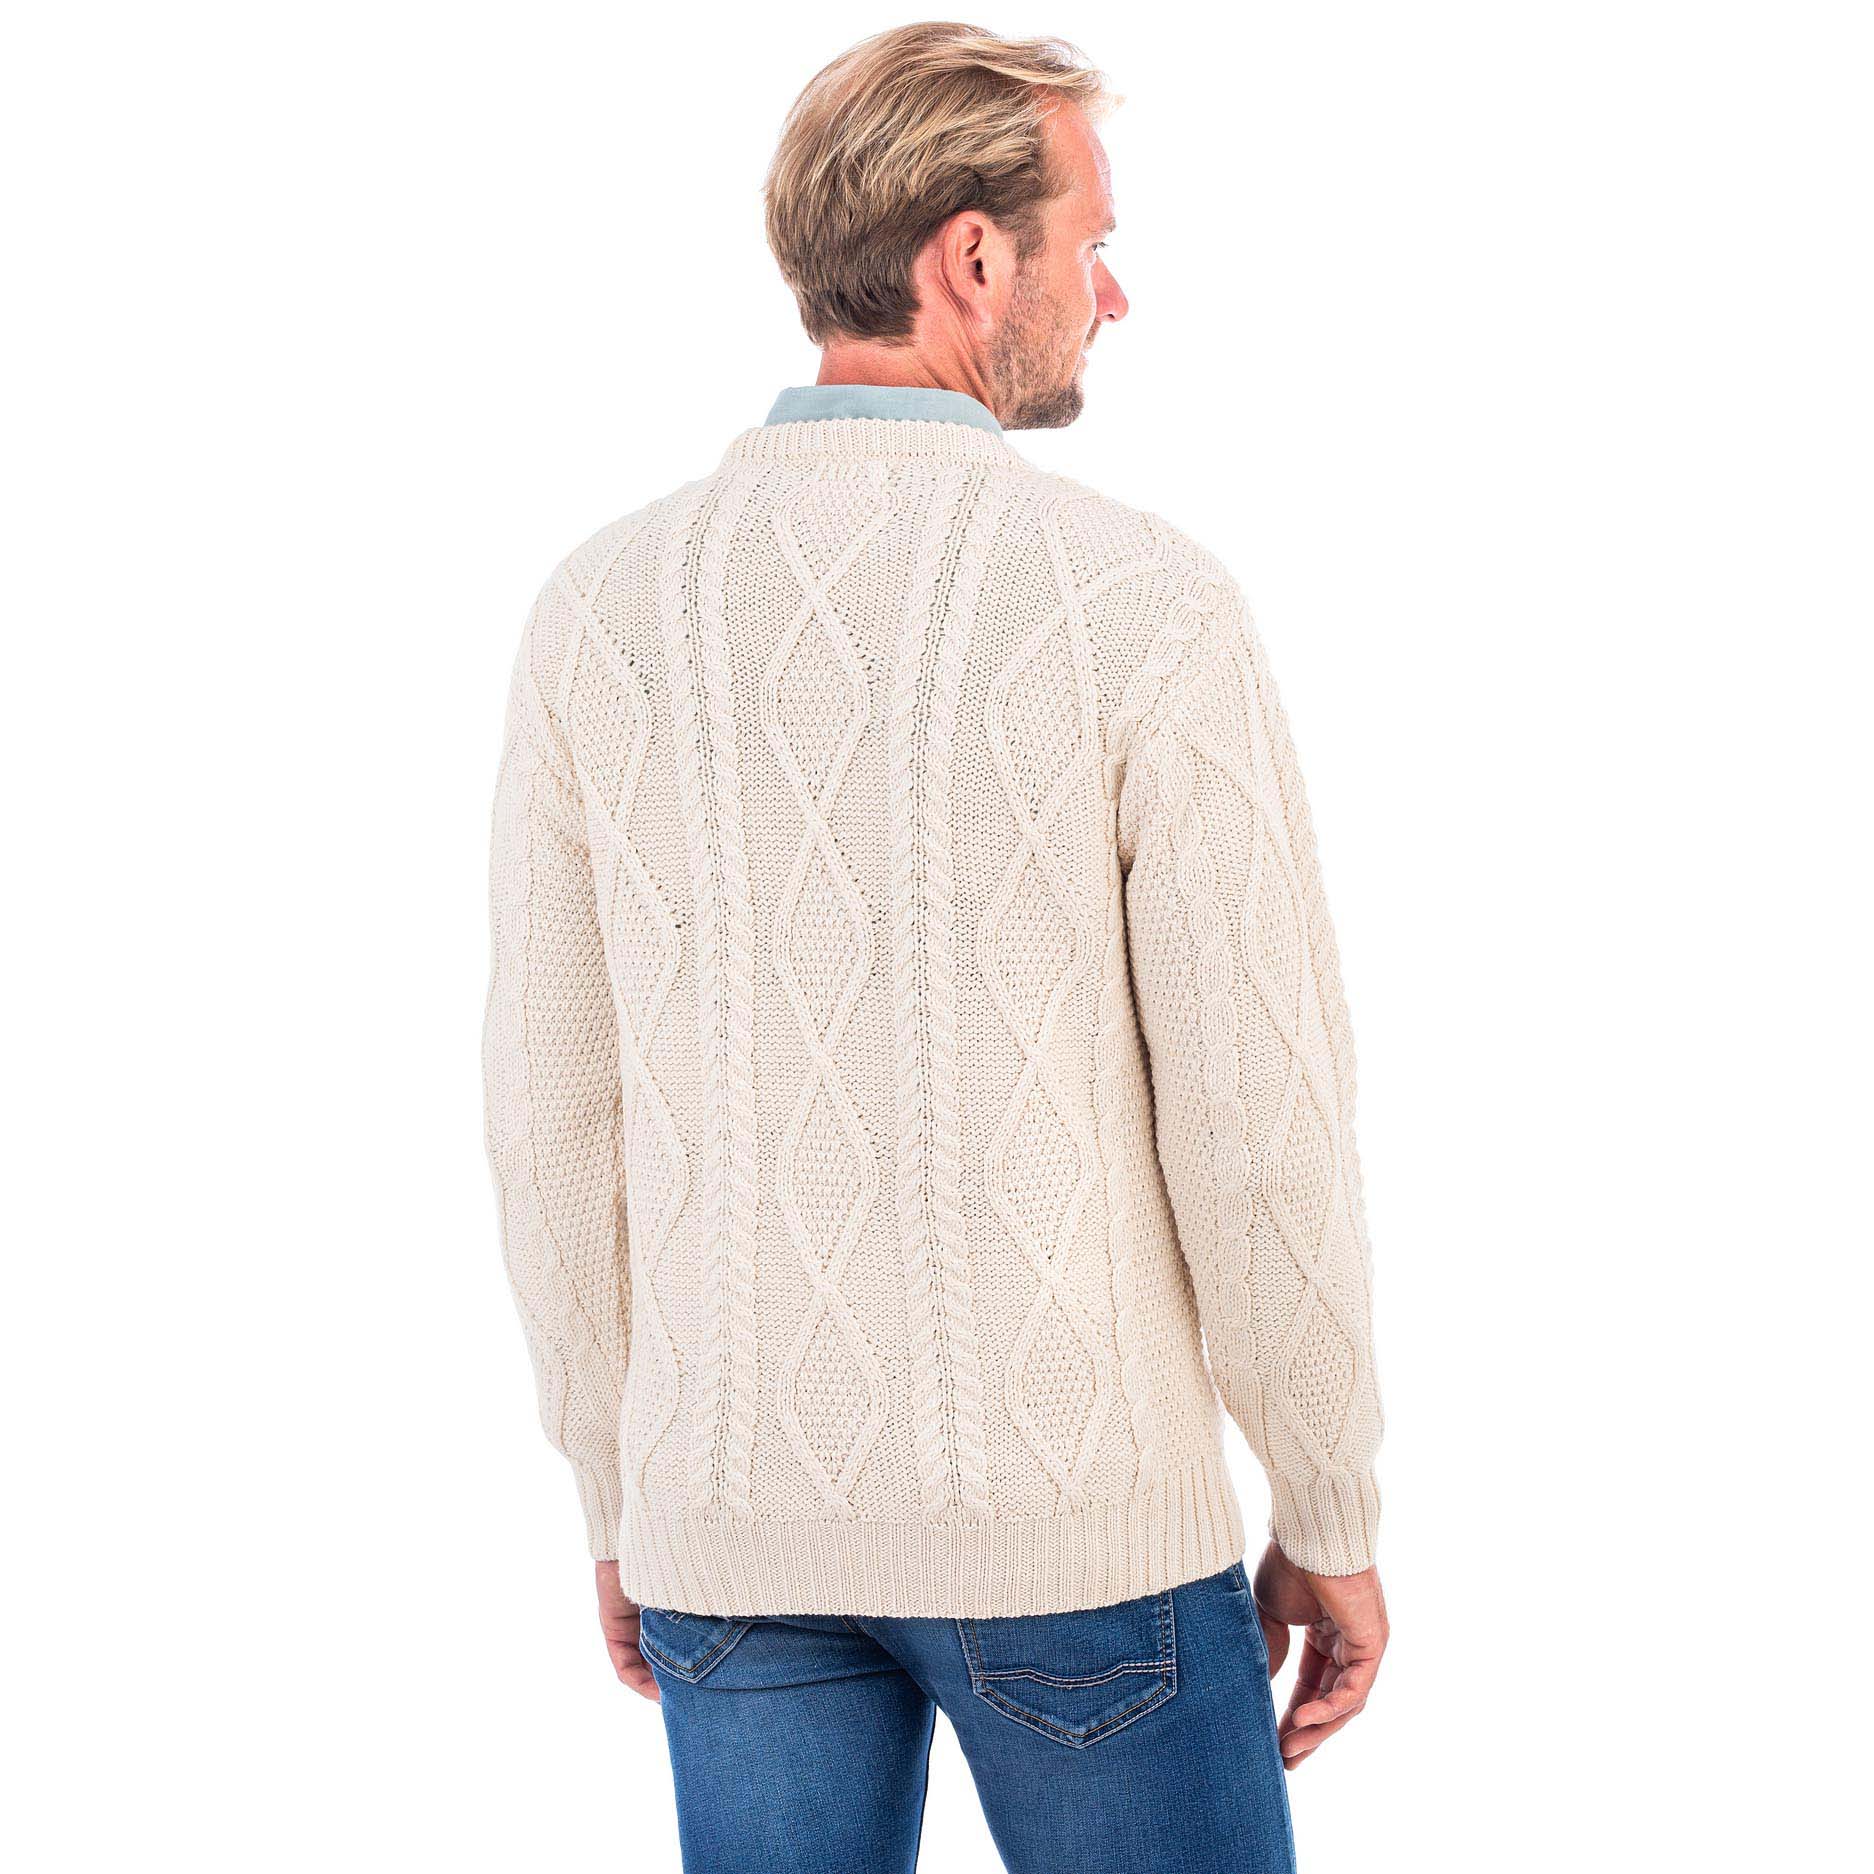 Product image for Irish Sweater | Aran Knit Crew Neck Mens Sweater